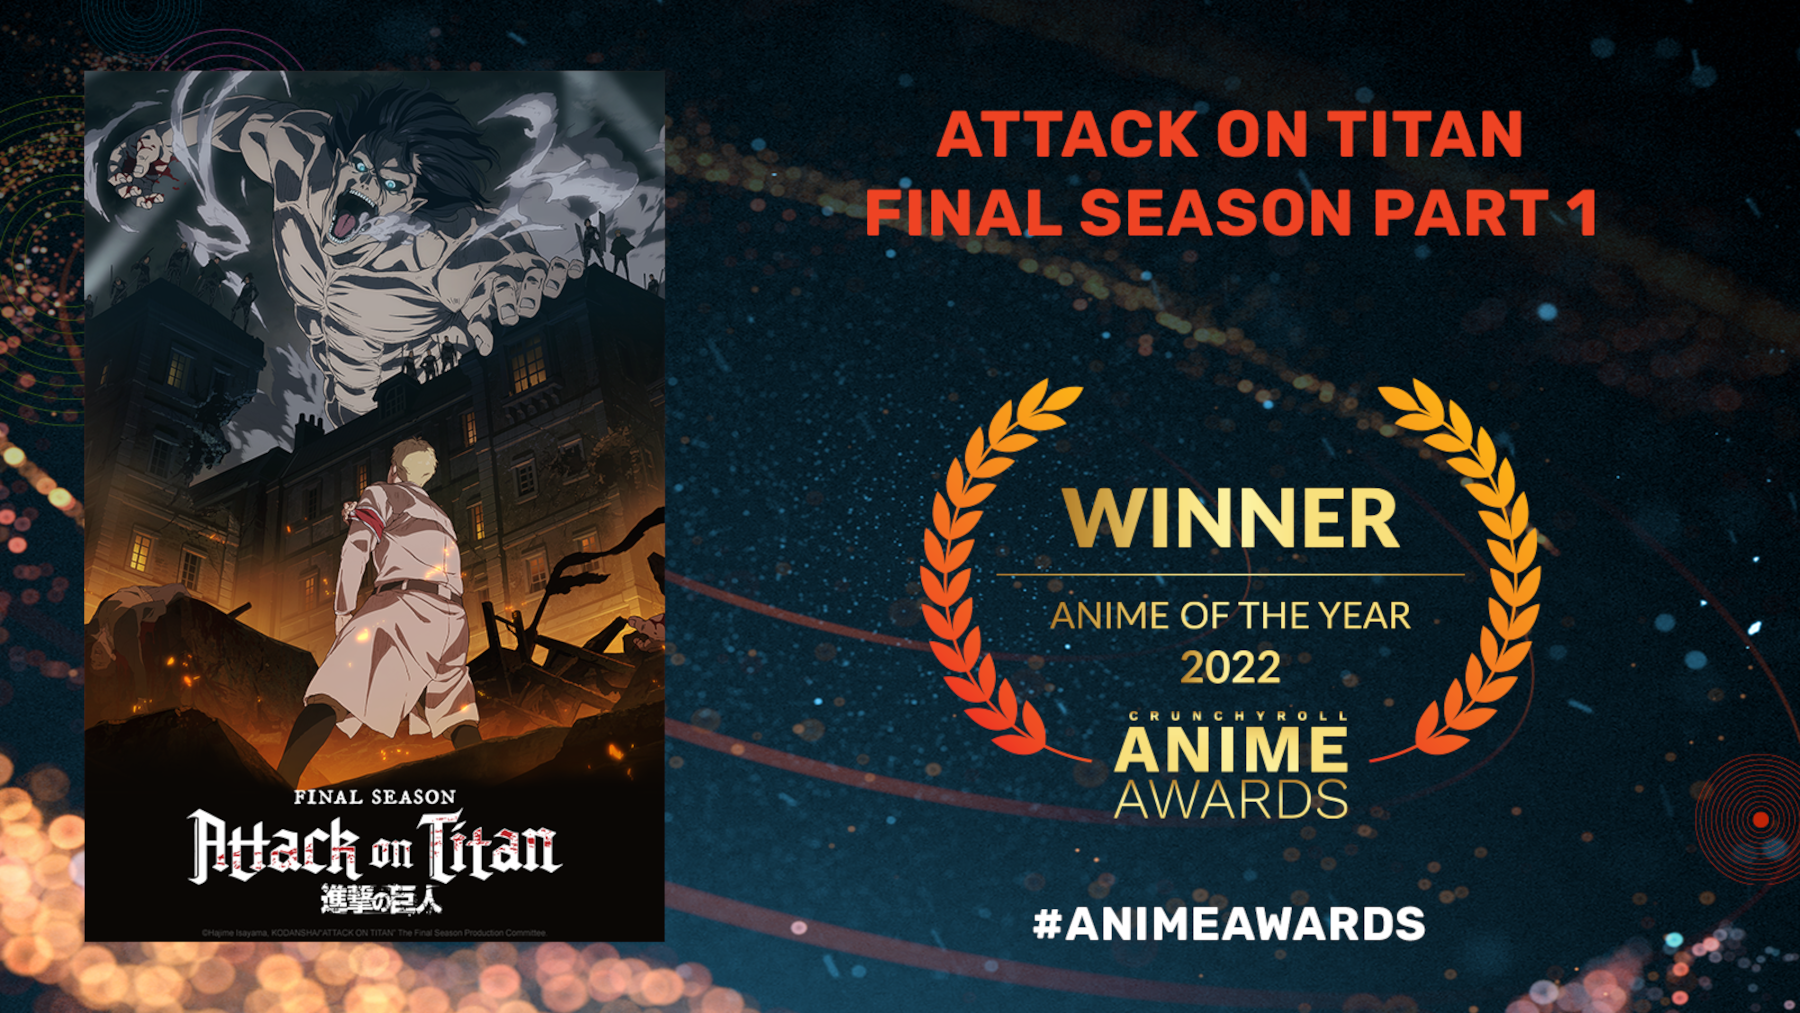 Here are the winners of Crunchyroll's 2023 Anime Awards